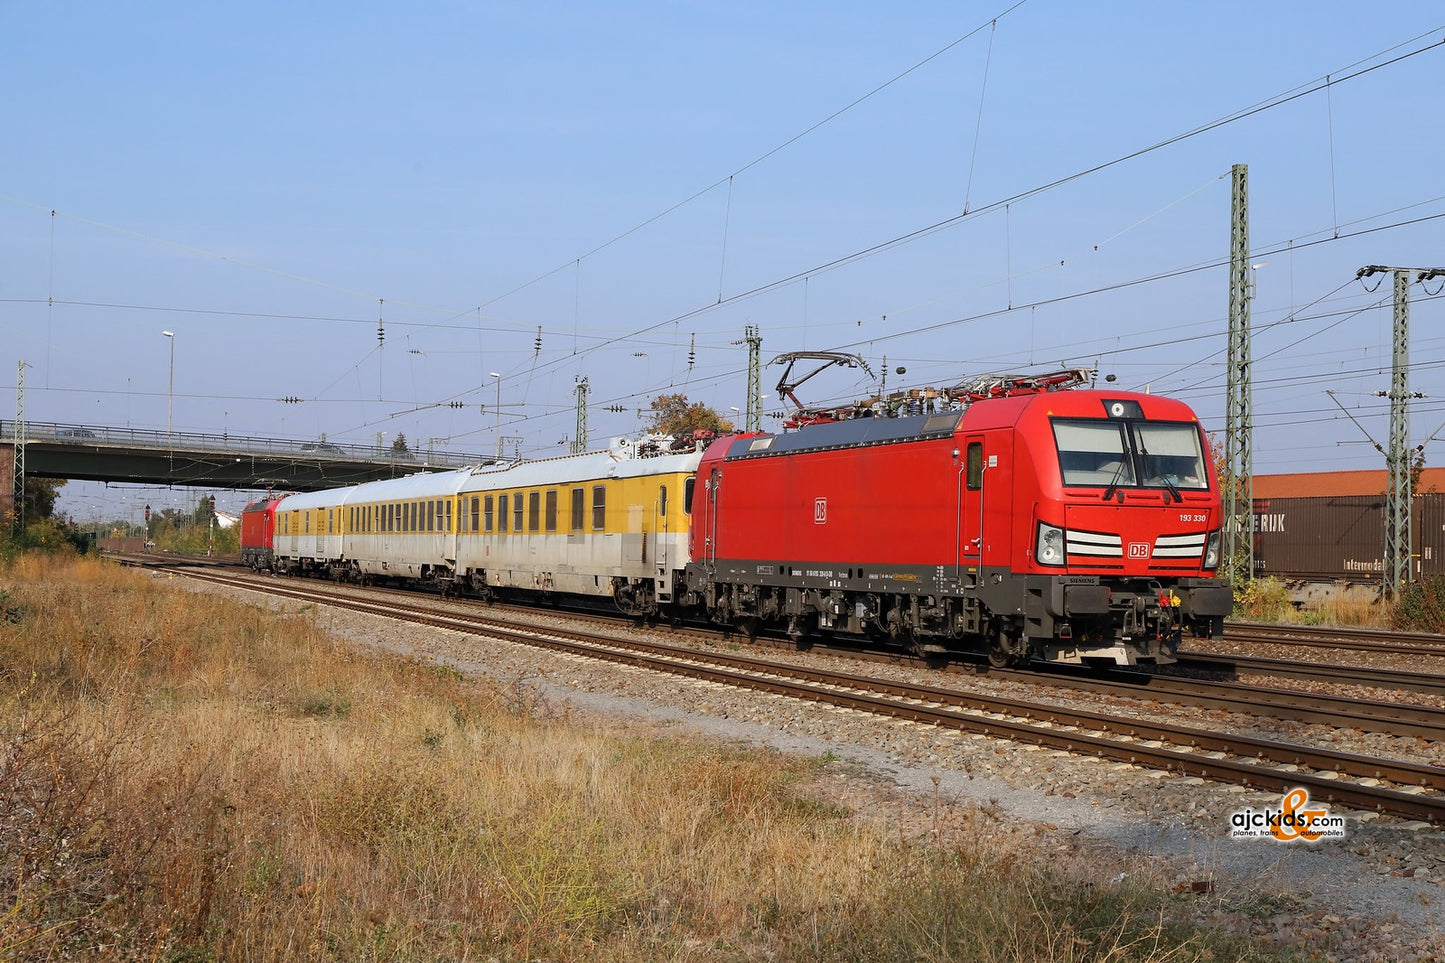 Marklin 36181 - Class 193 Electric Locomotive